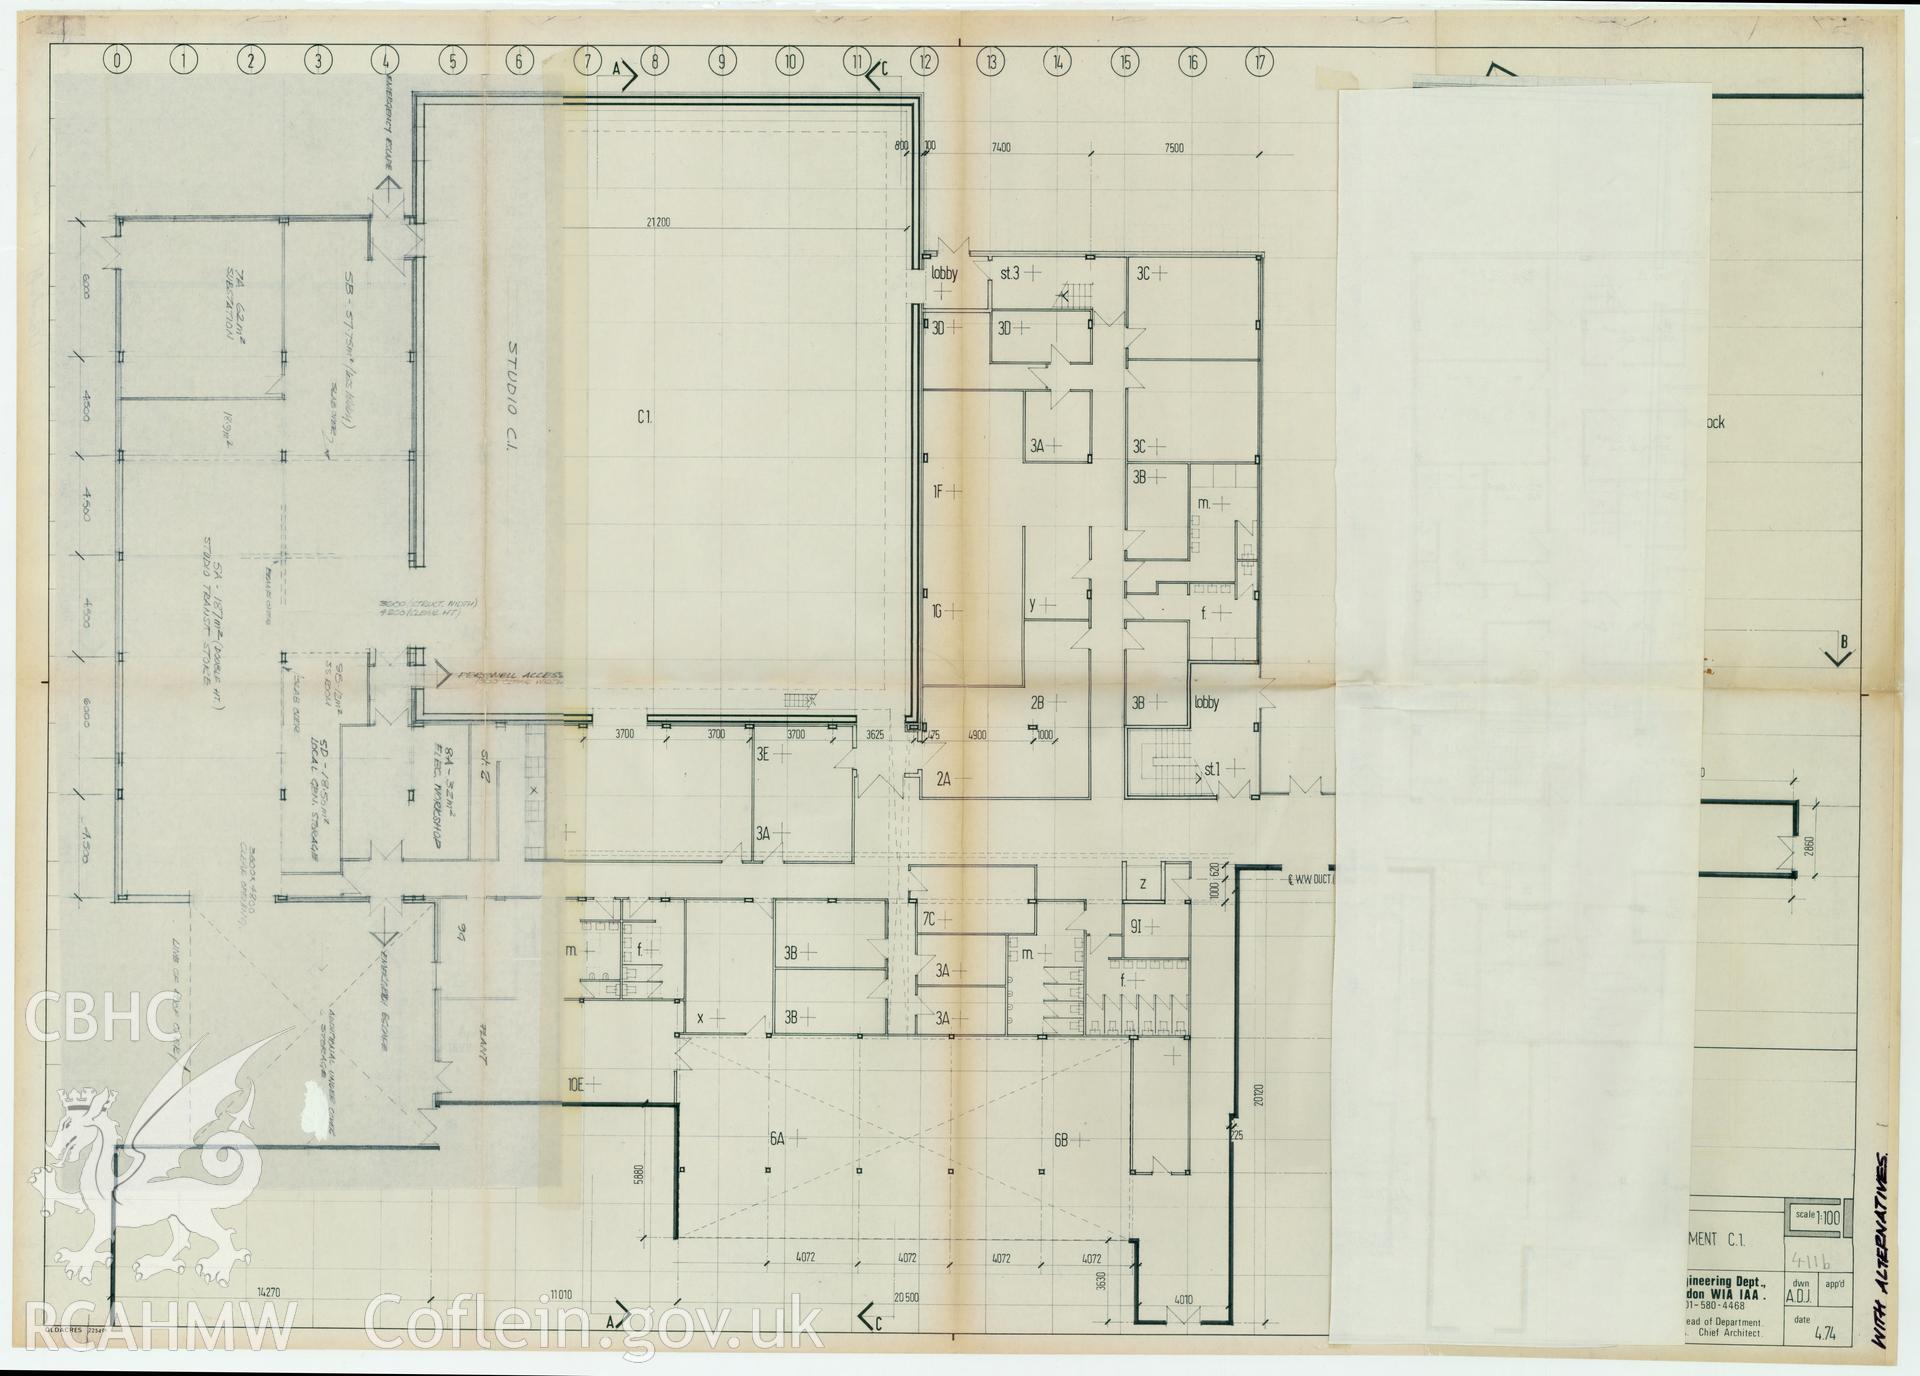 Digitised drawing plan of Llandaff production studio C1 - Colour TV development. Ground floor plan. Drawing no. 411b, April 1974.